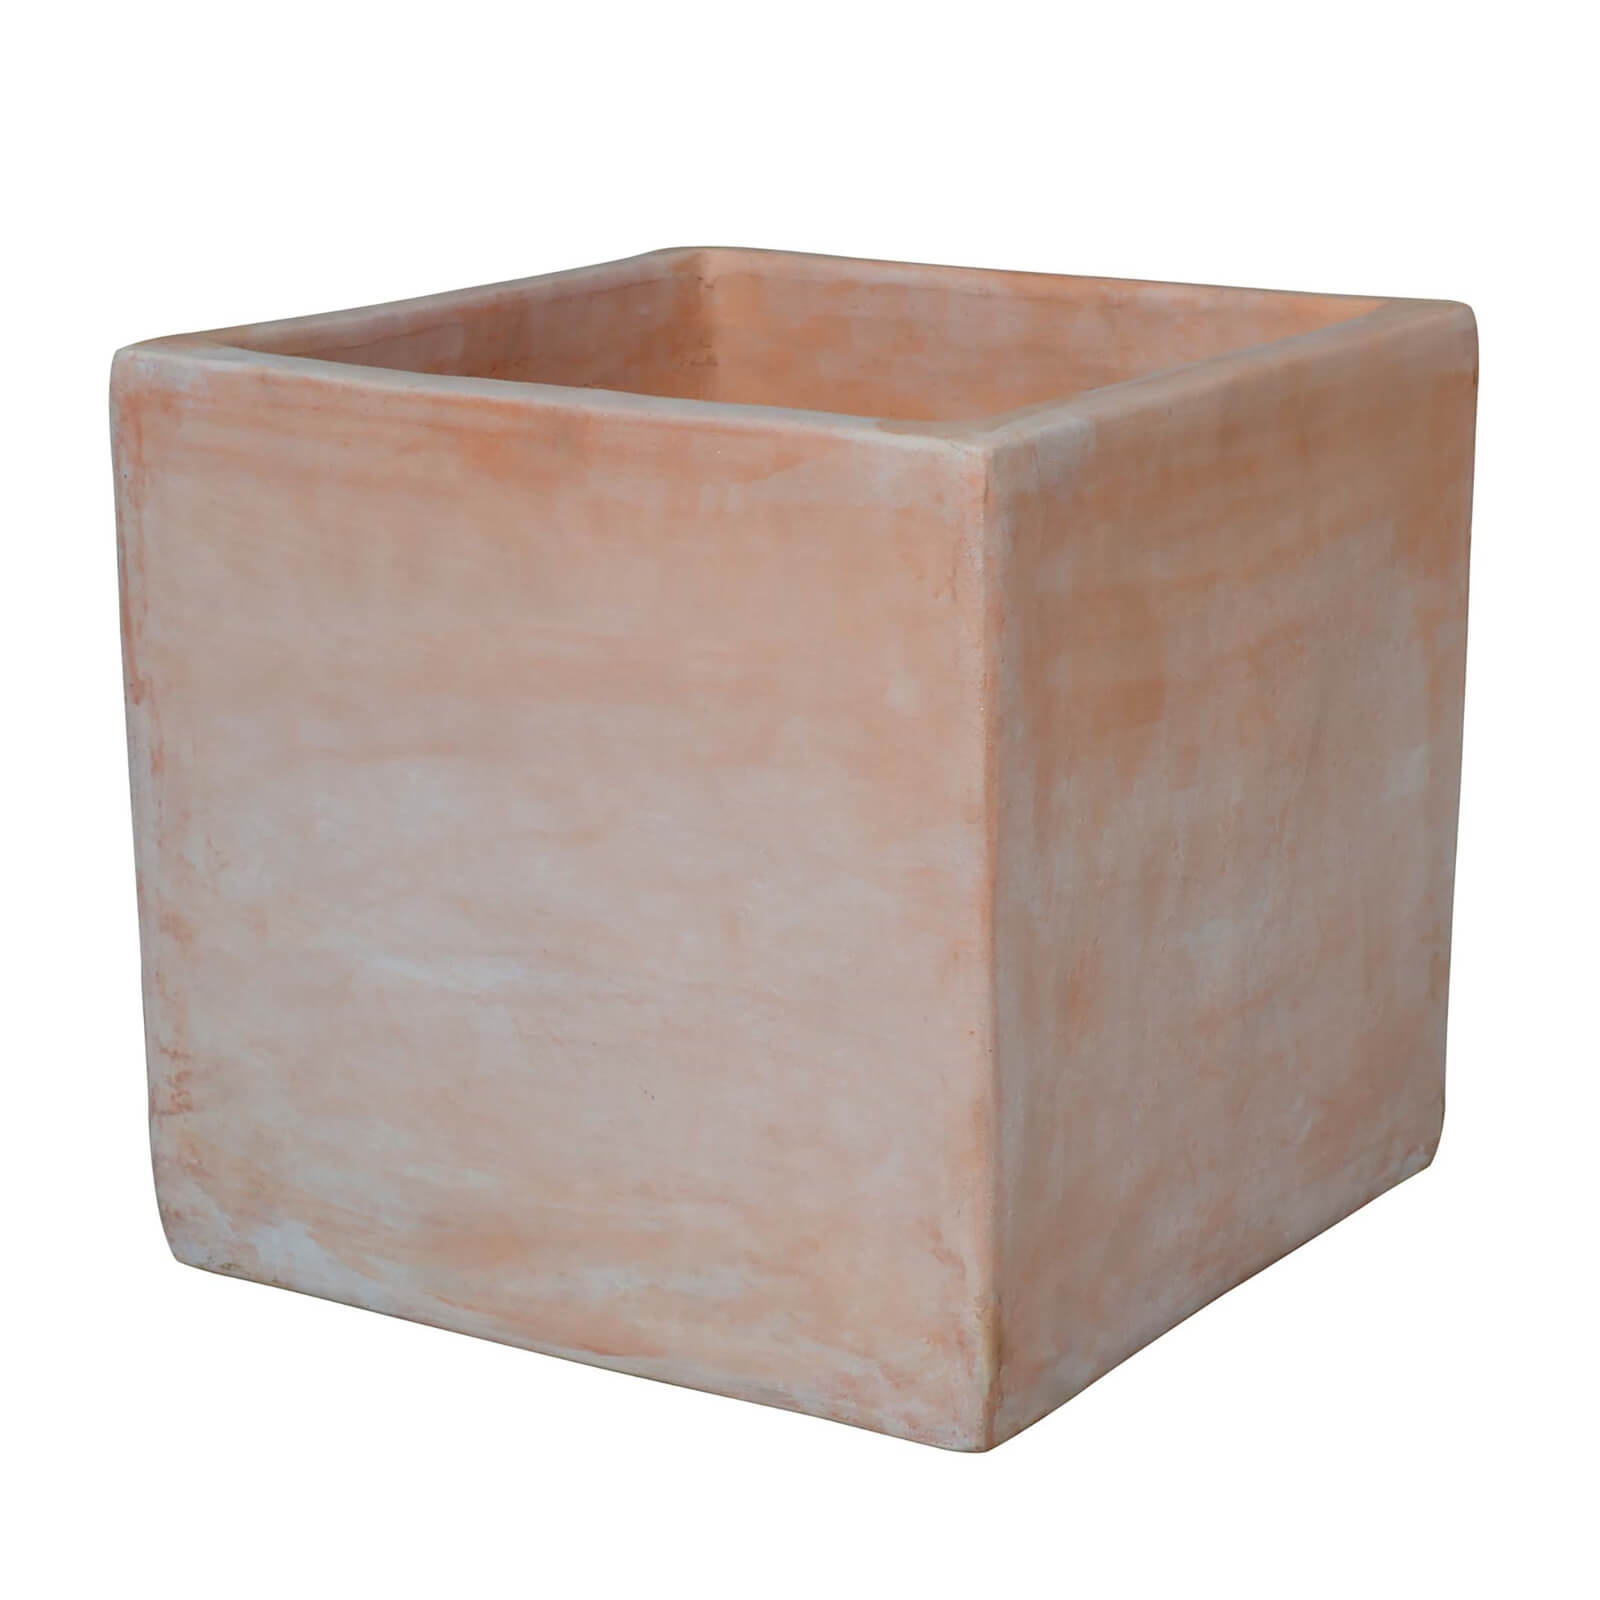 Terracotta Square Pot - 26cm